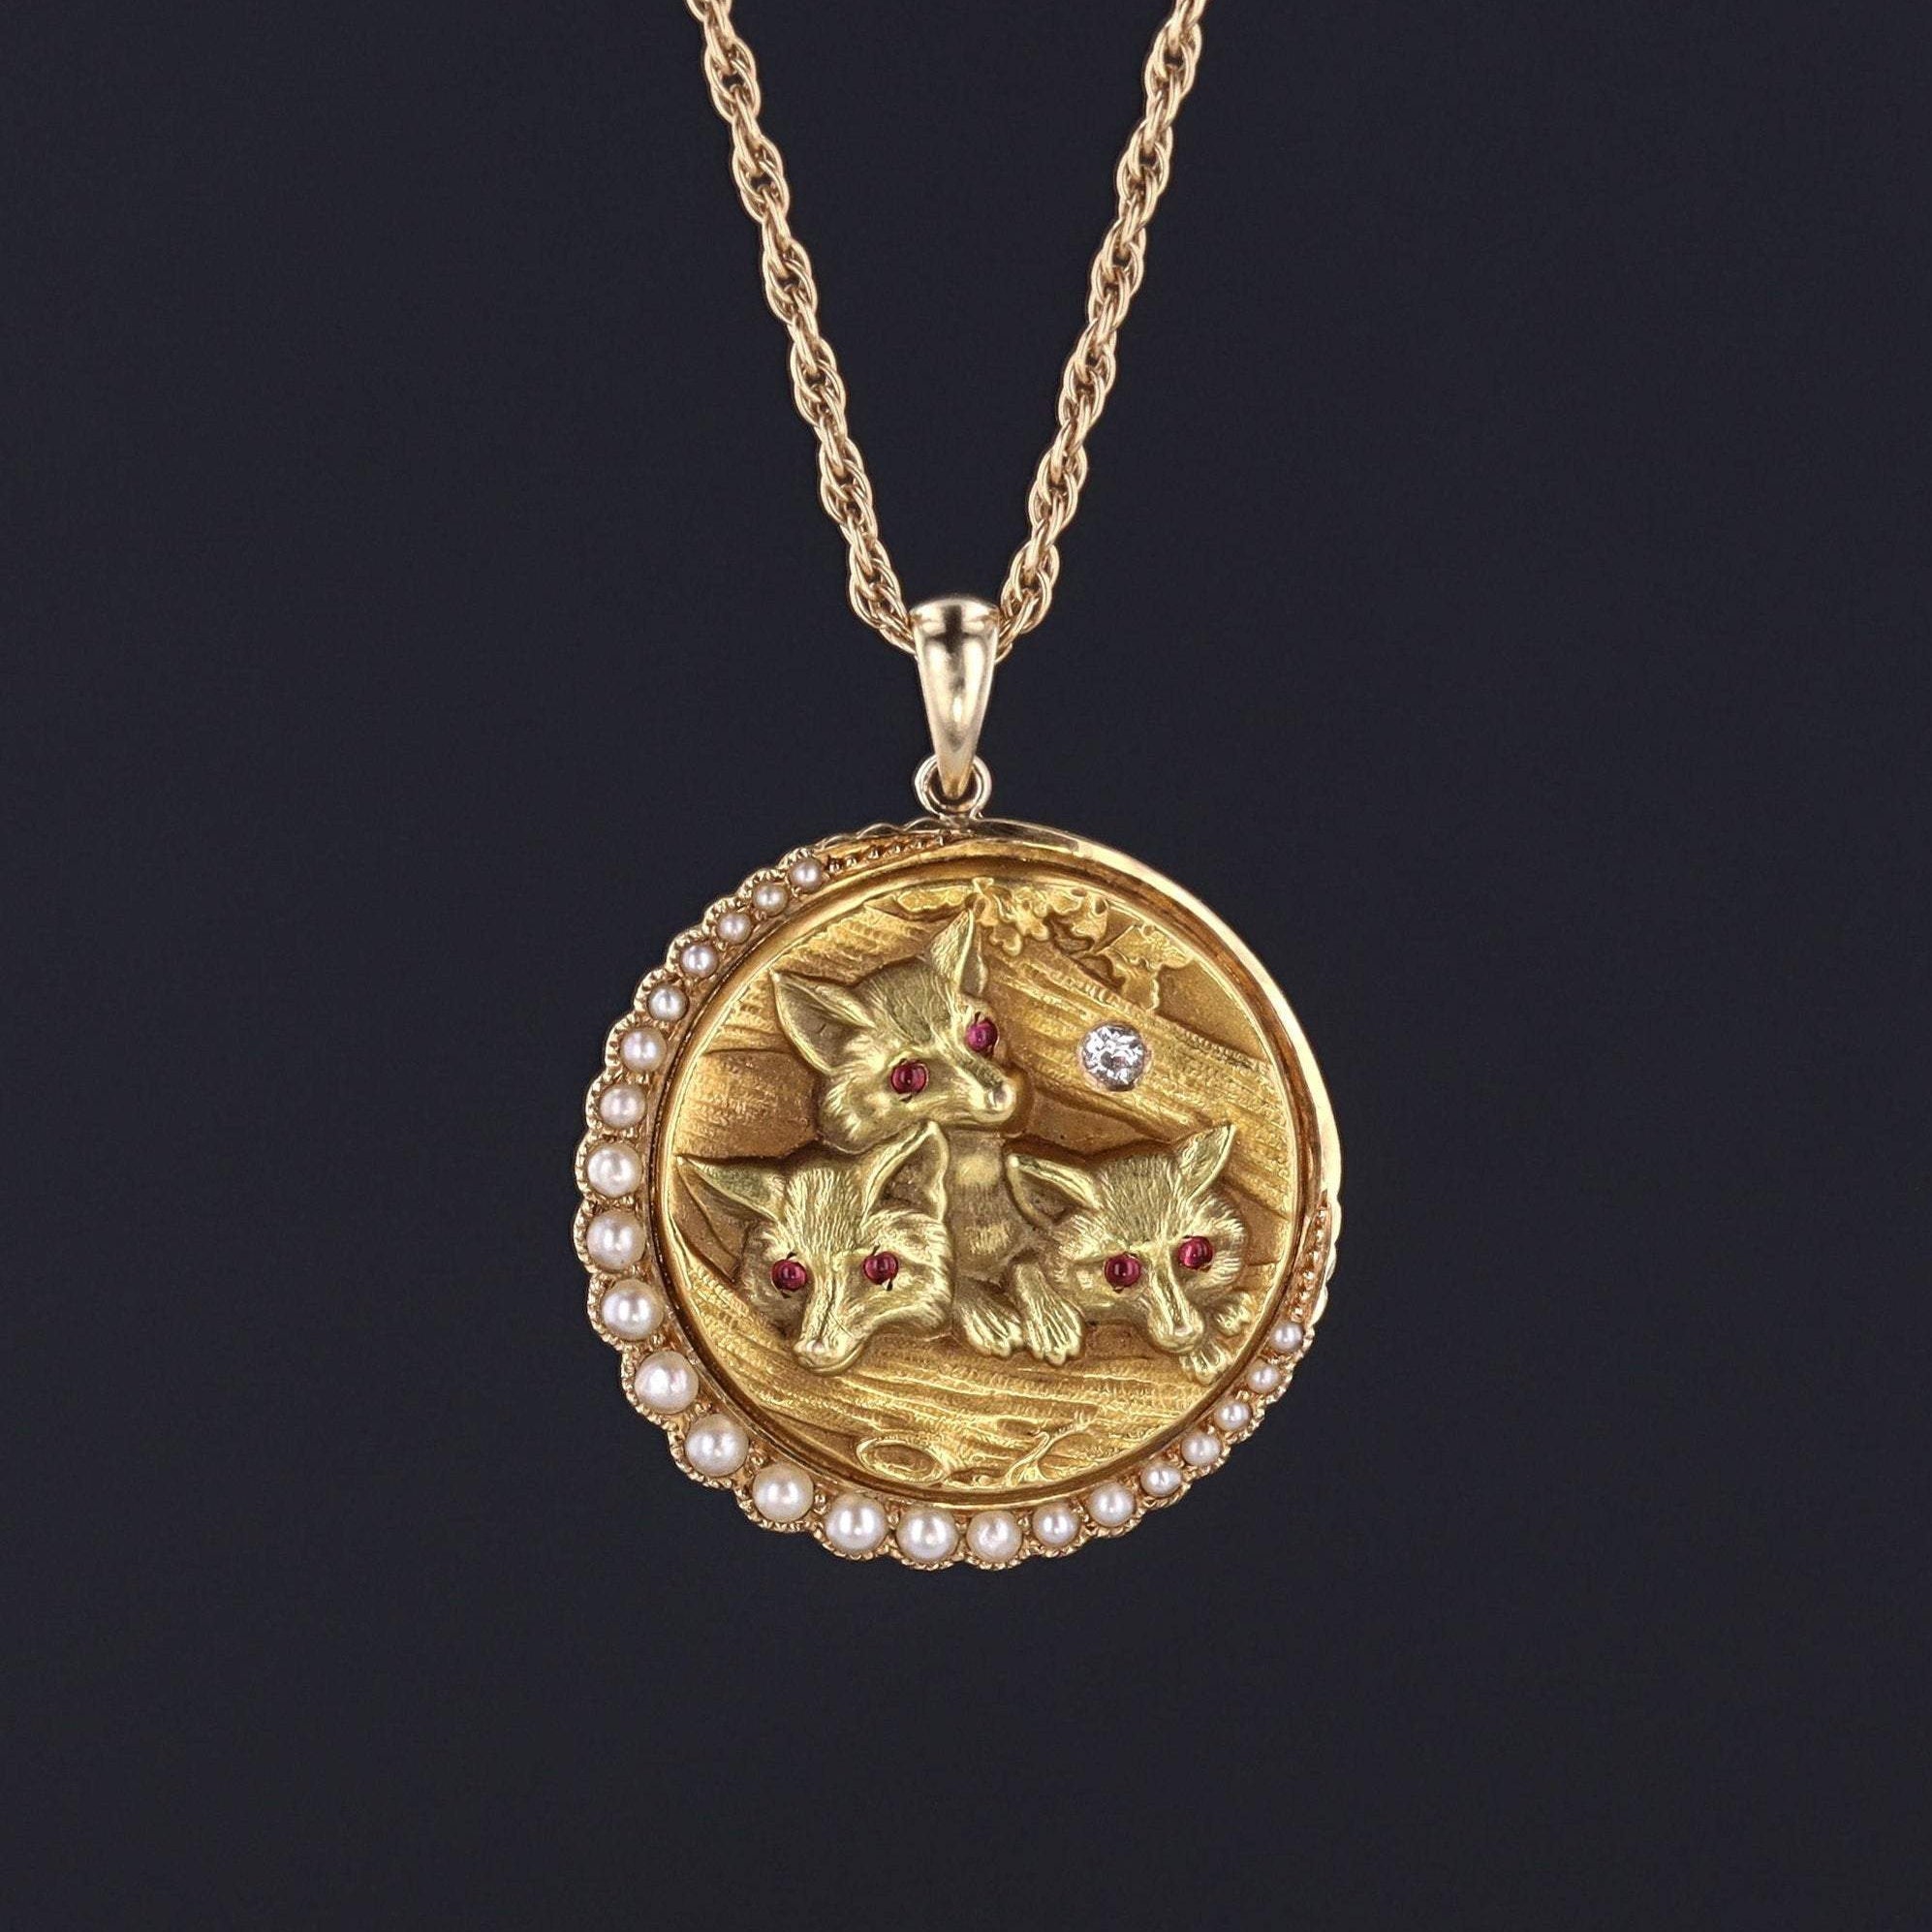 Fox Pendant | Fox Cub & Crescent Moon Pendant with Diamond and Pearls | Antique Pin Conversion | 14k Pendant on Optional 14k Chain